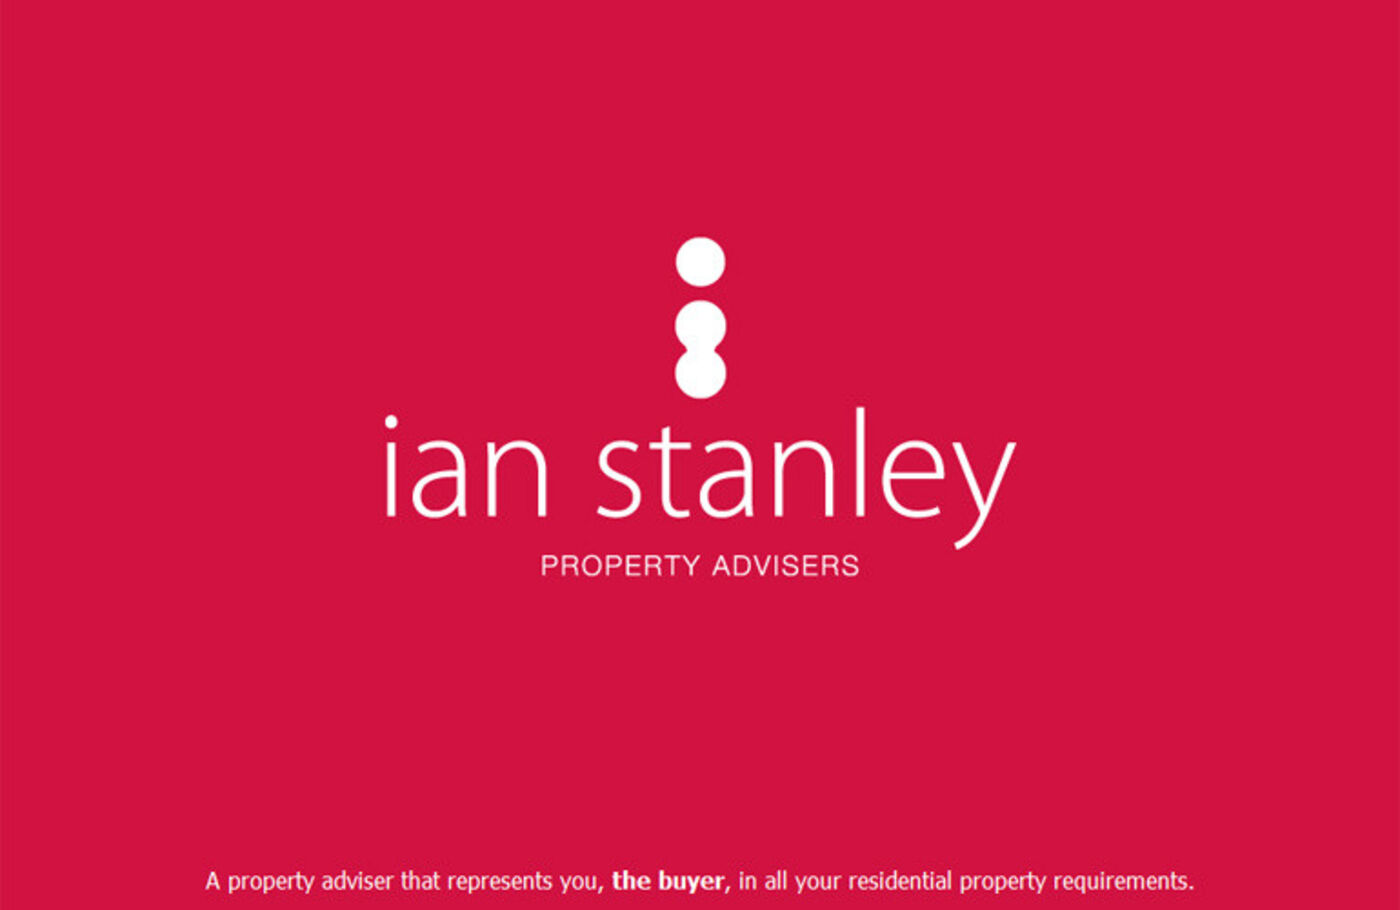 Ian Stanley Property Advisers Welcome